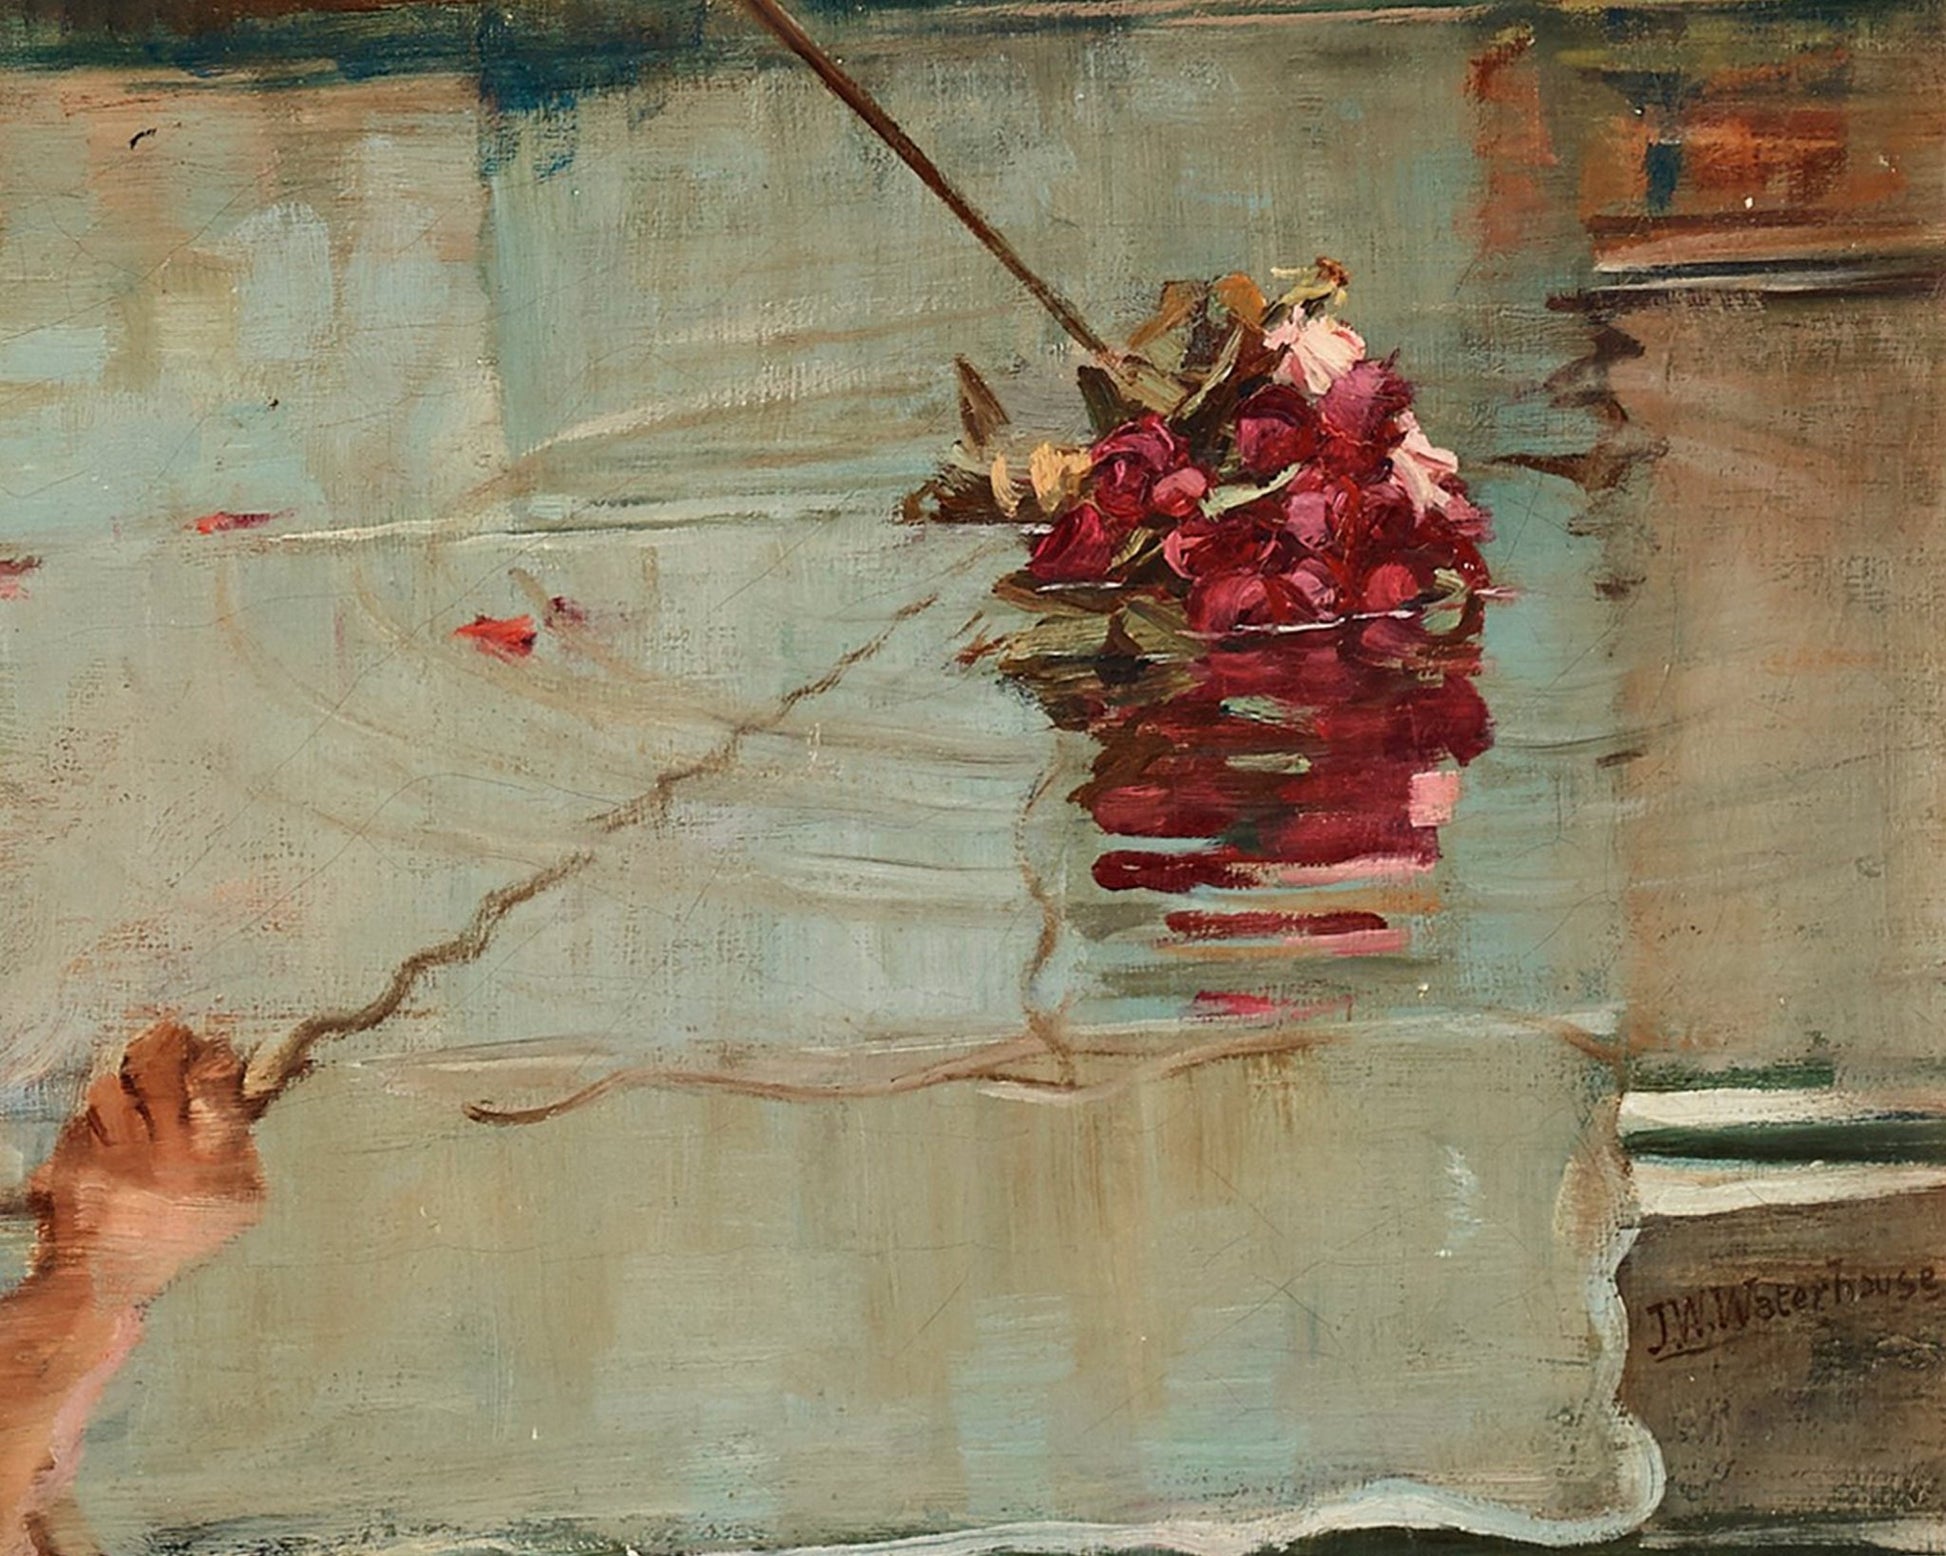 John William Waterhouse "The Rescue" (1890) - Mabon Gallery